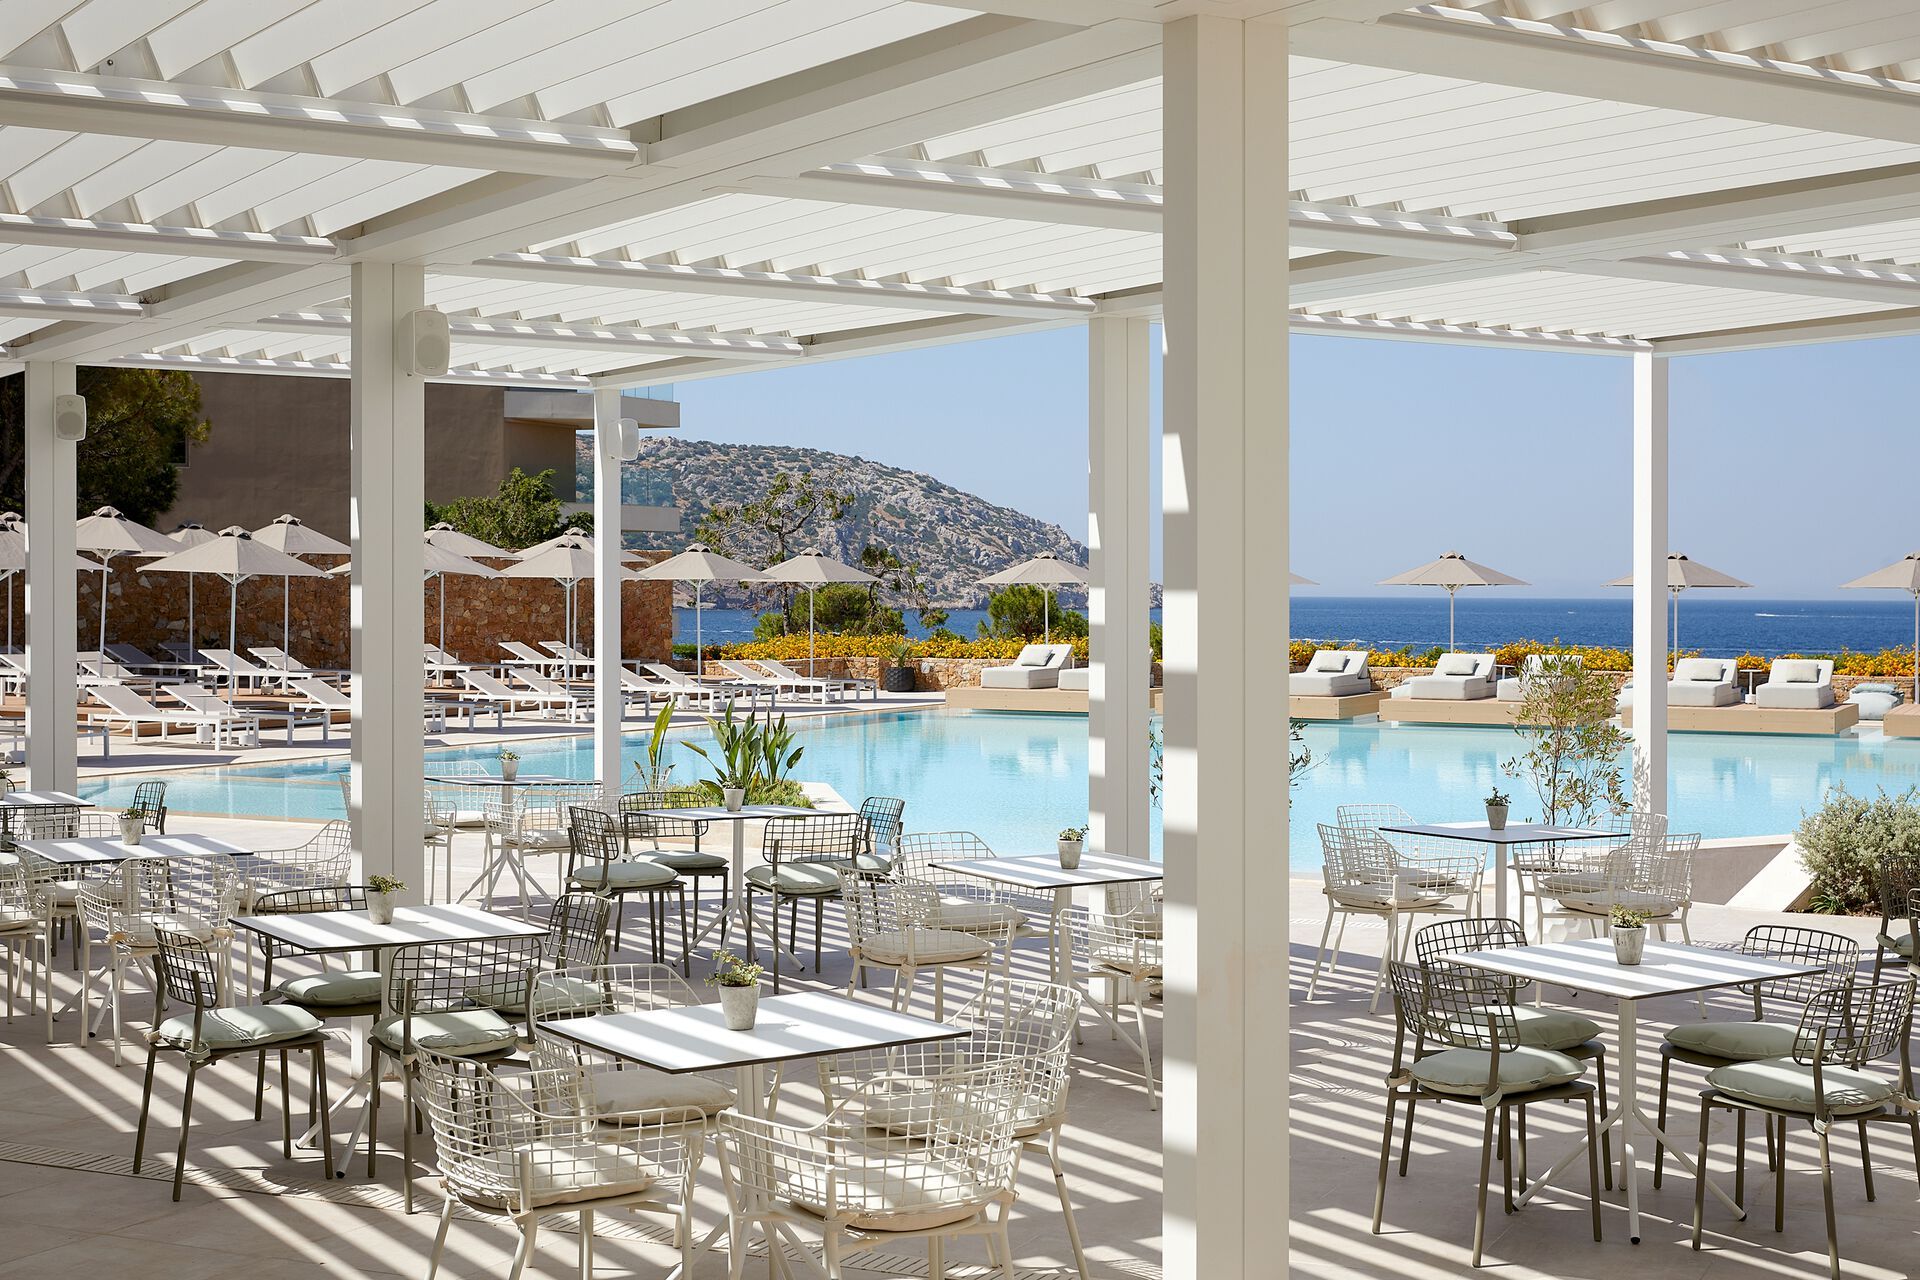 Grèce - Grèce continentale - Athènes et sa région - Ever Eden Beach Resort Hotel 4*